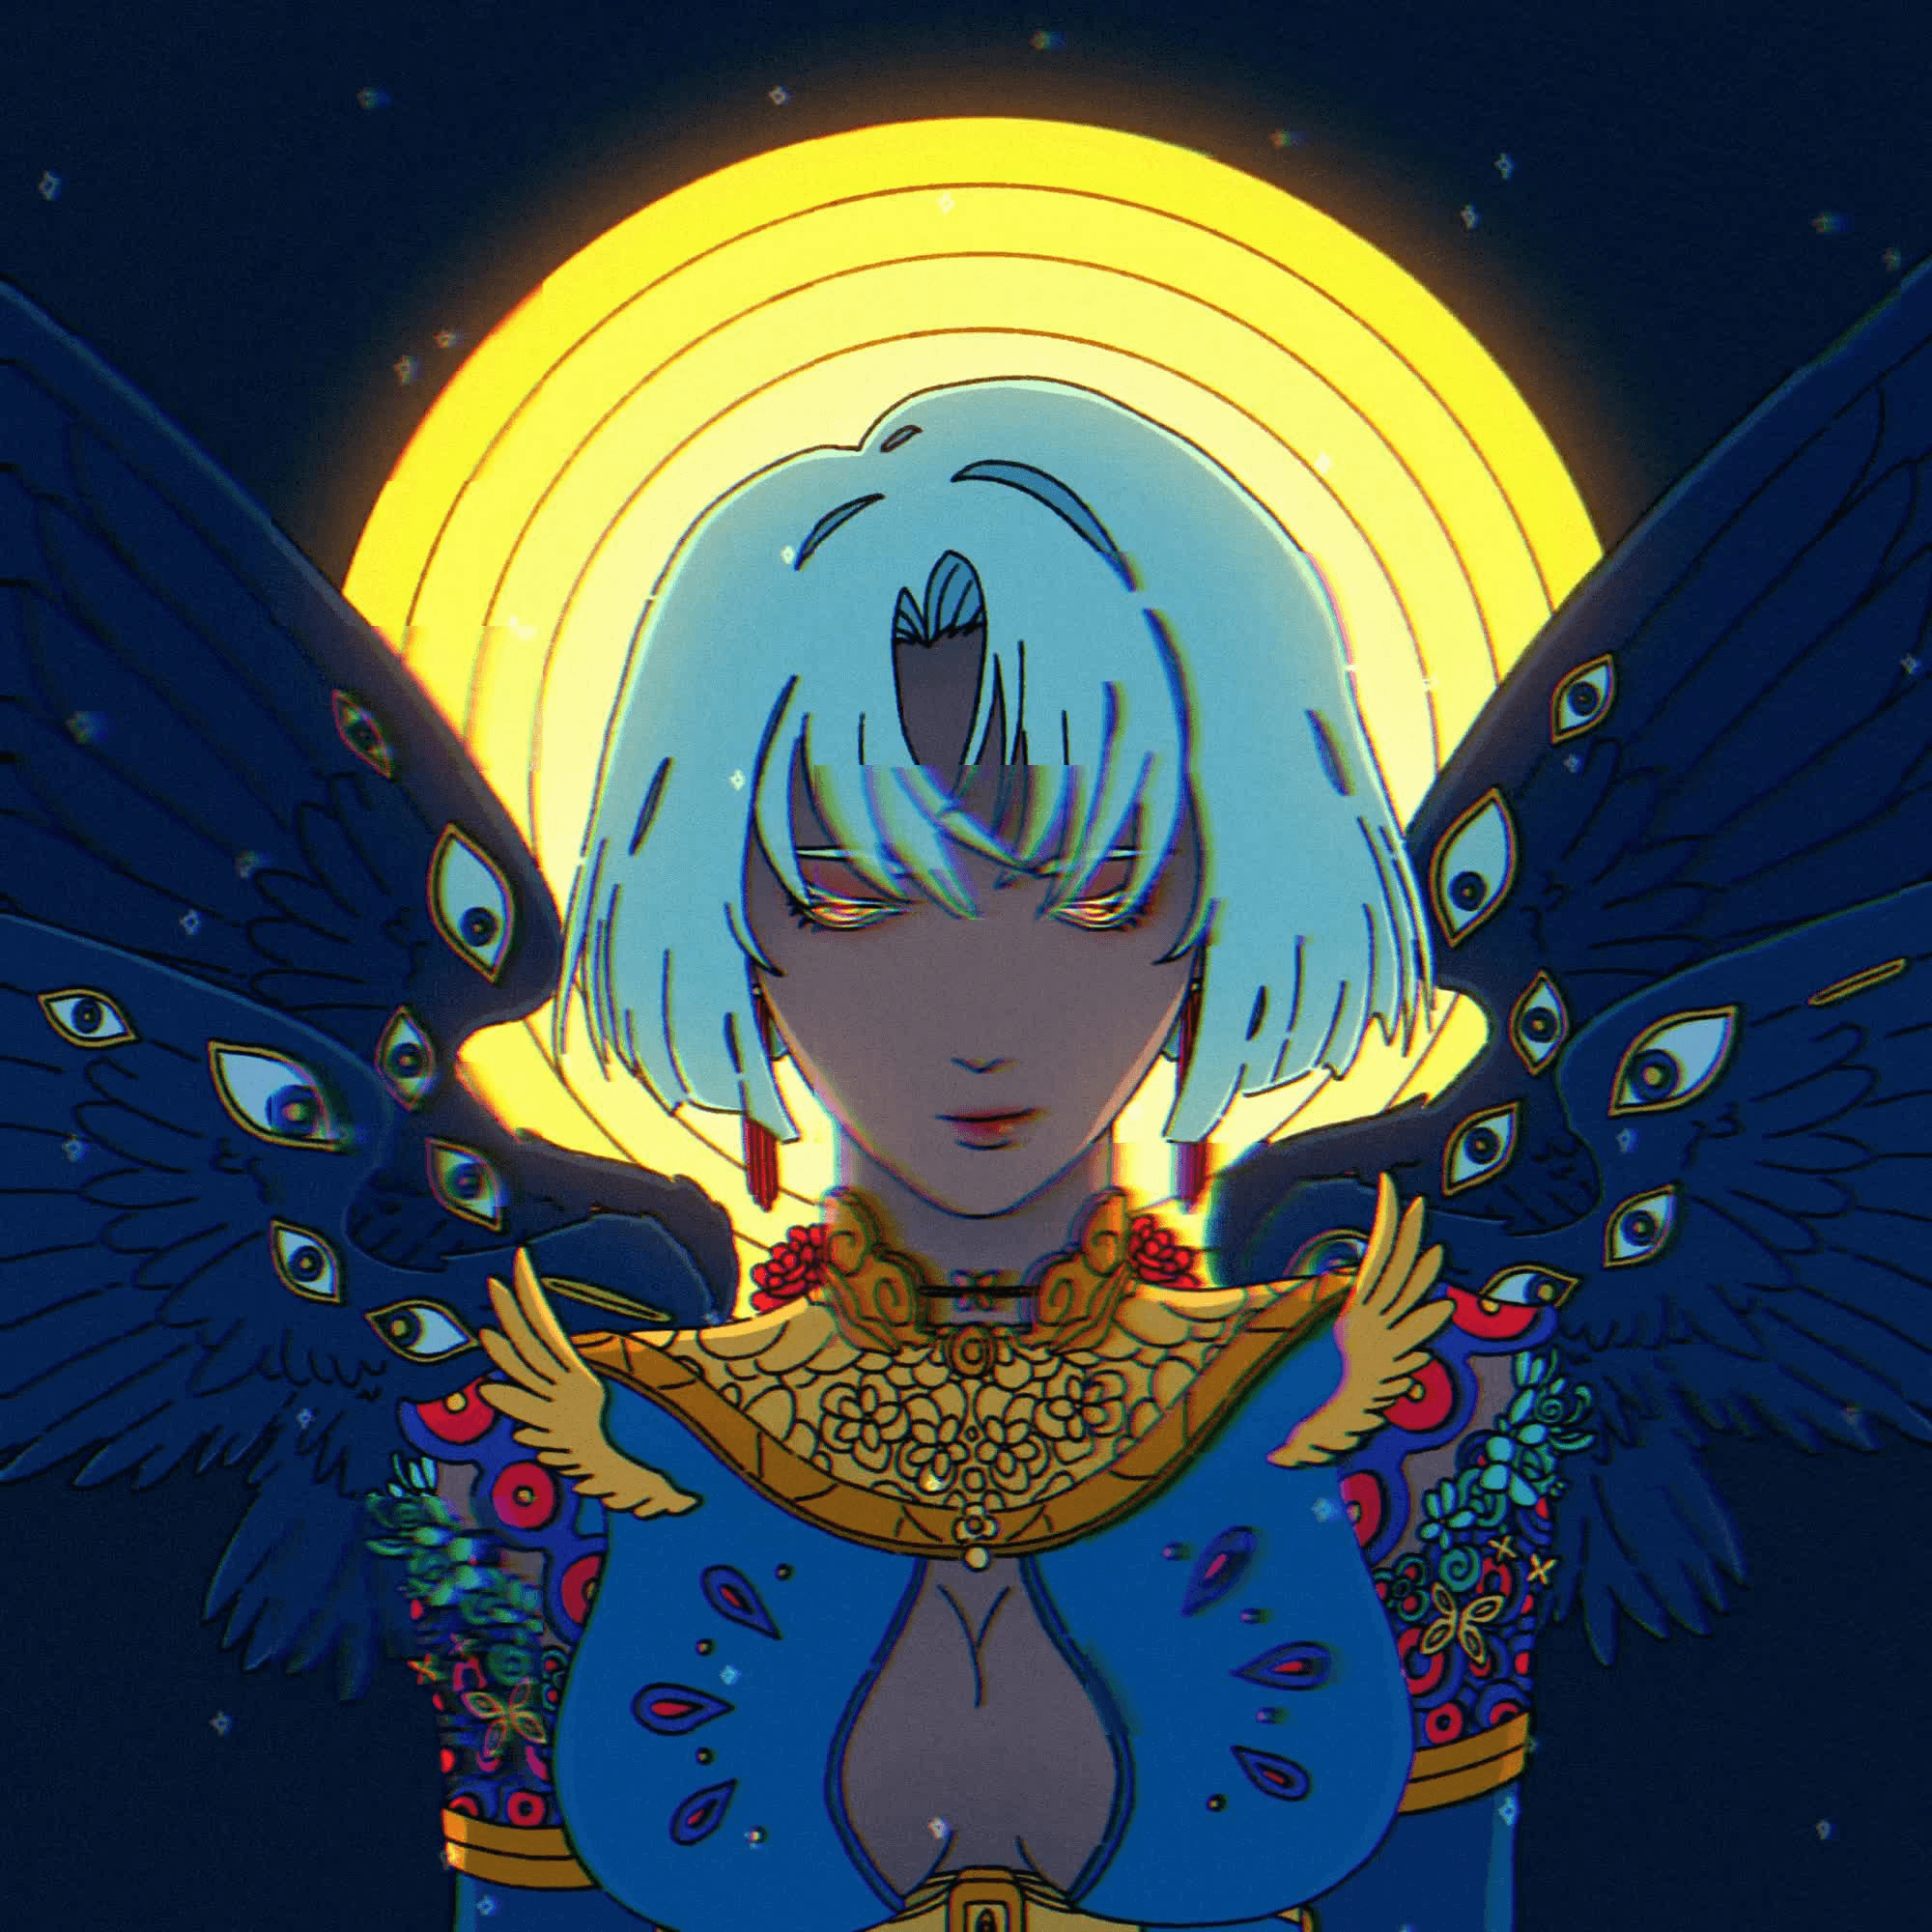 Archangel of death #20/27